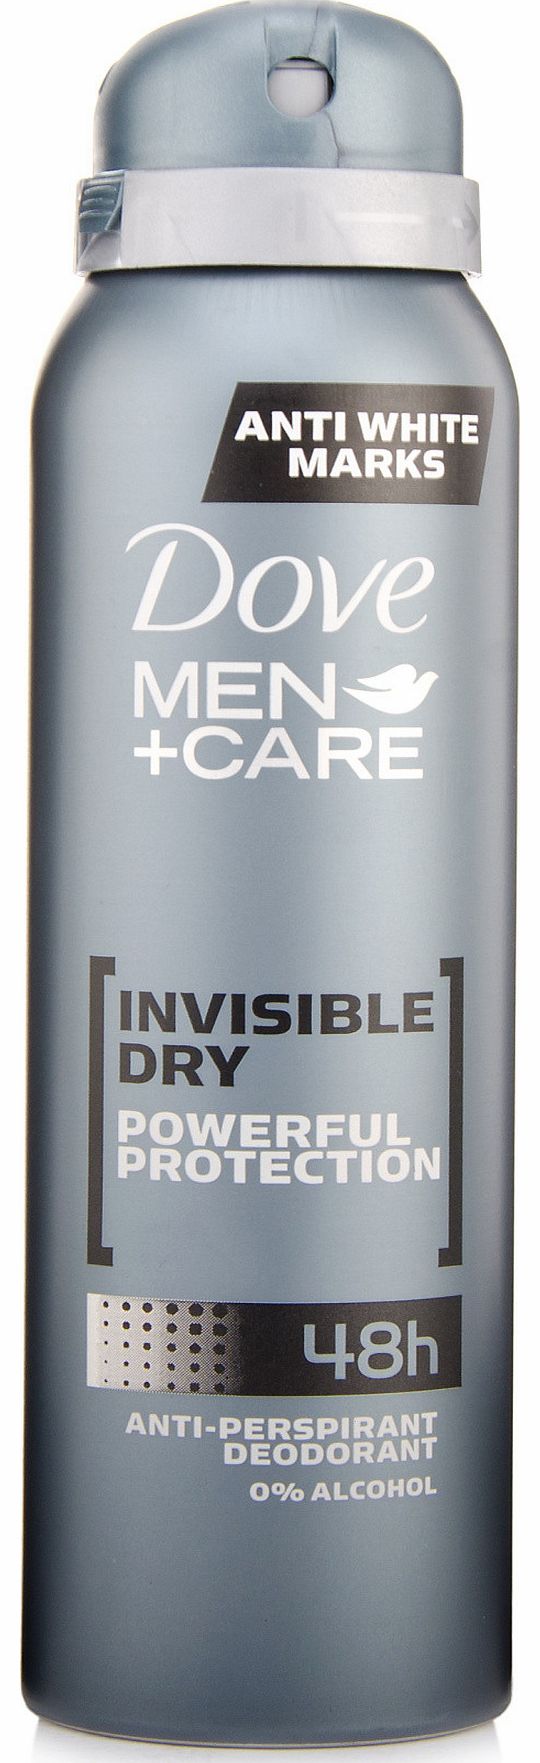 Men+Care Invisible Dry Anti-Perspirant